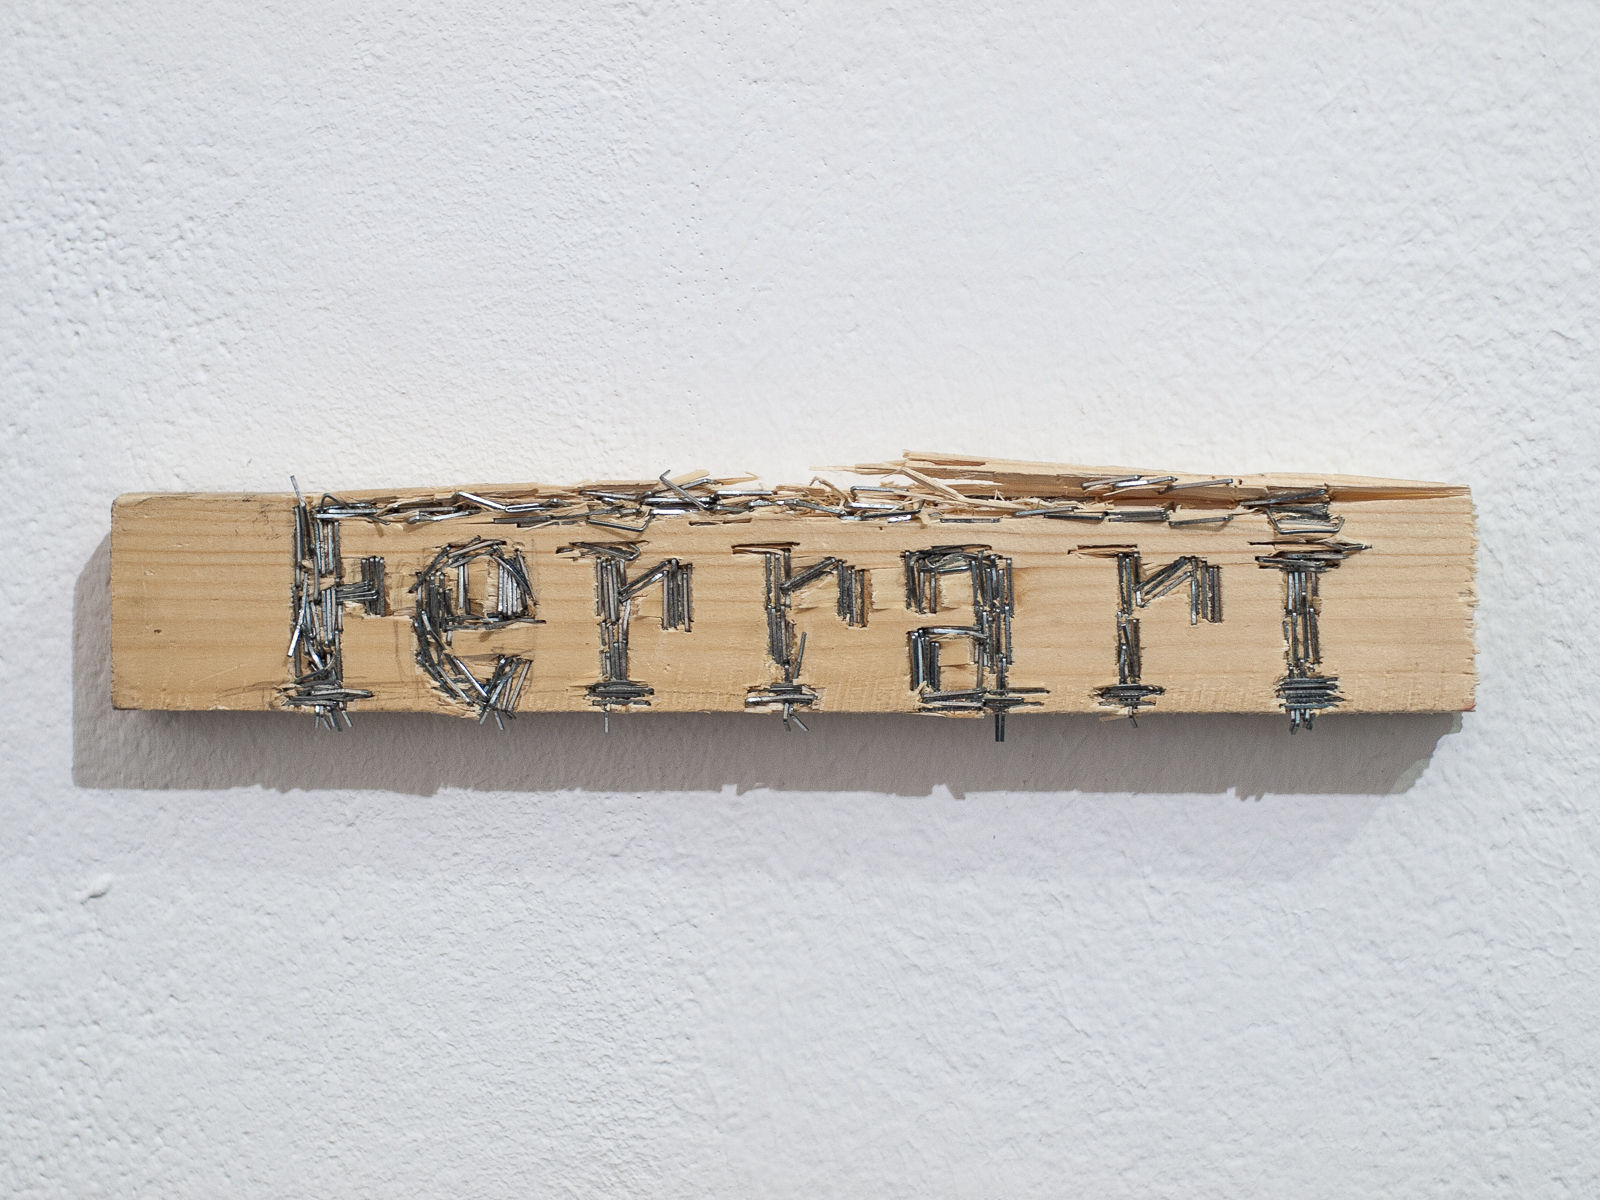 »Stapled Ferrari«, staples, wood, 28.8 x 5 x 2.3 cm